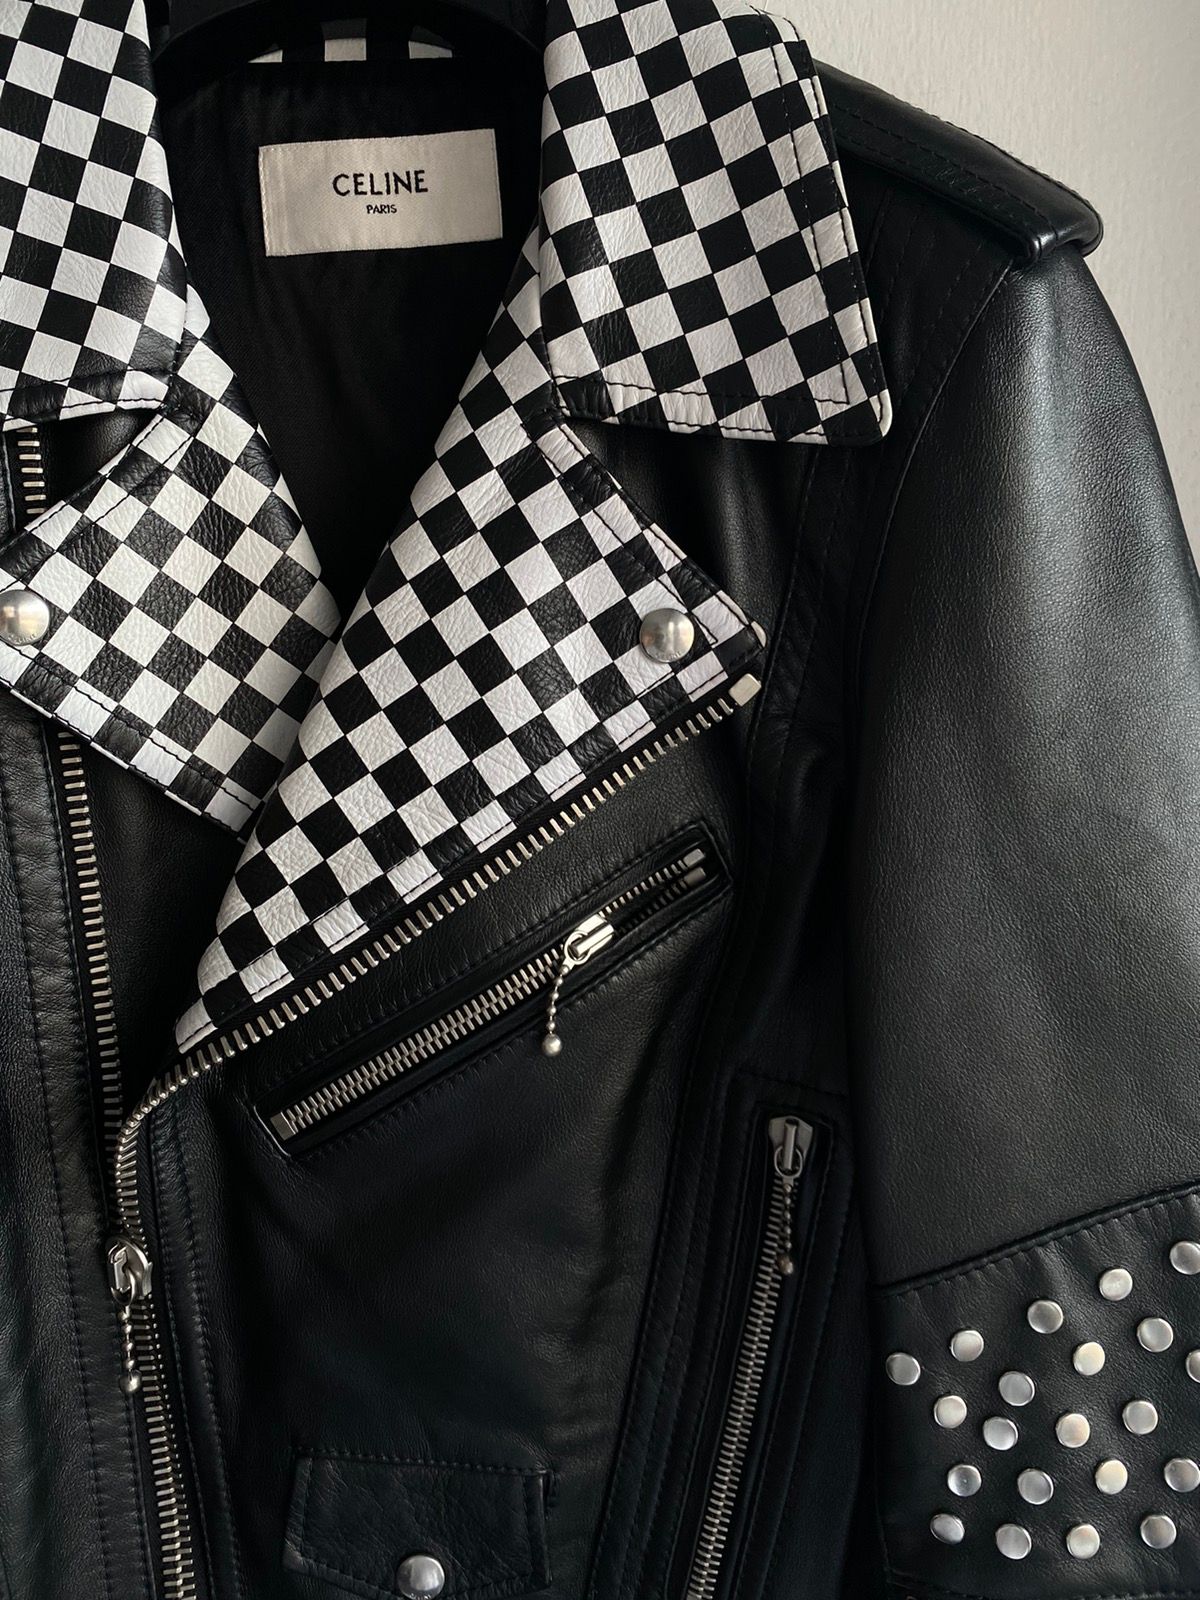 Celine AW19 NEW Damier Checkered Leather Moto Biker Jacket